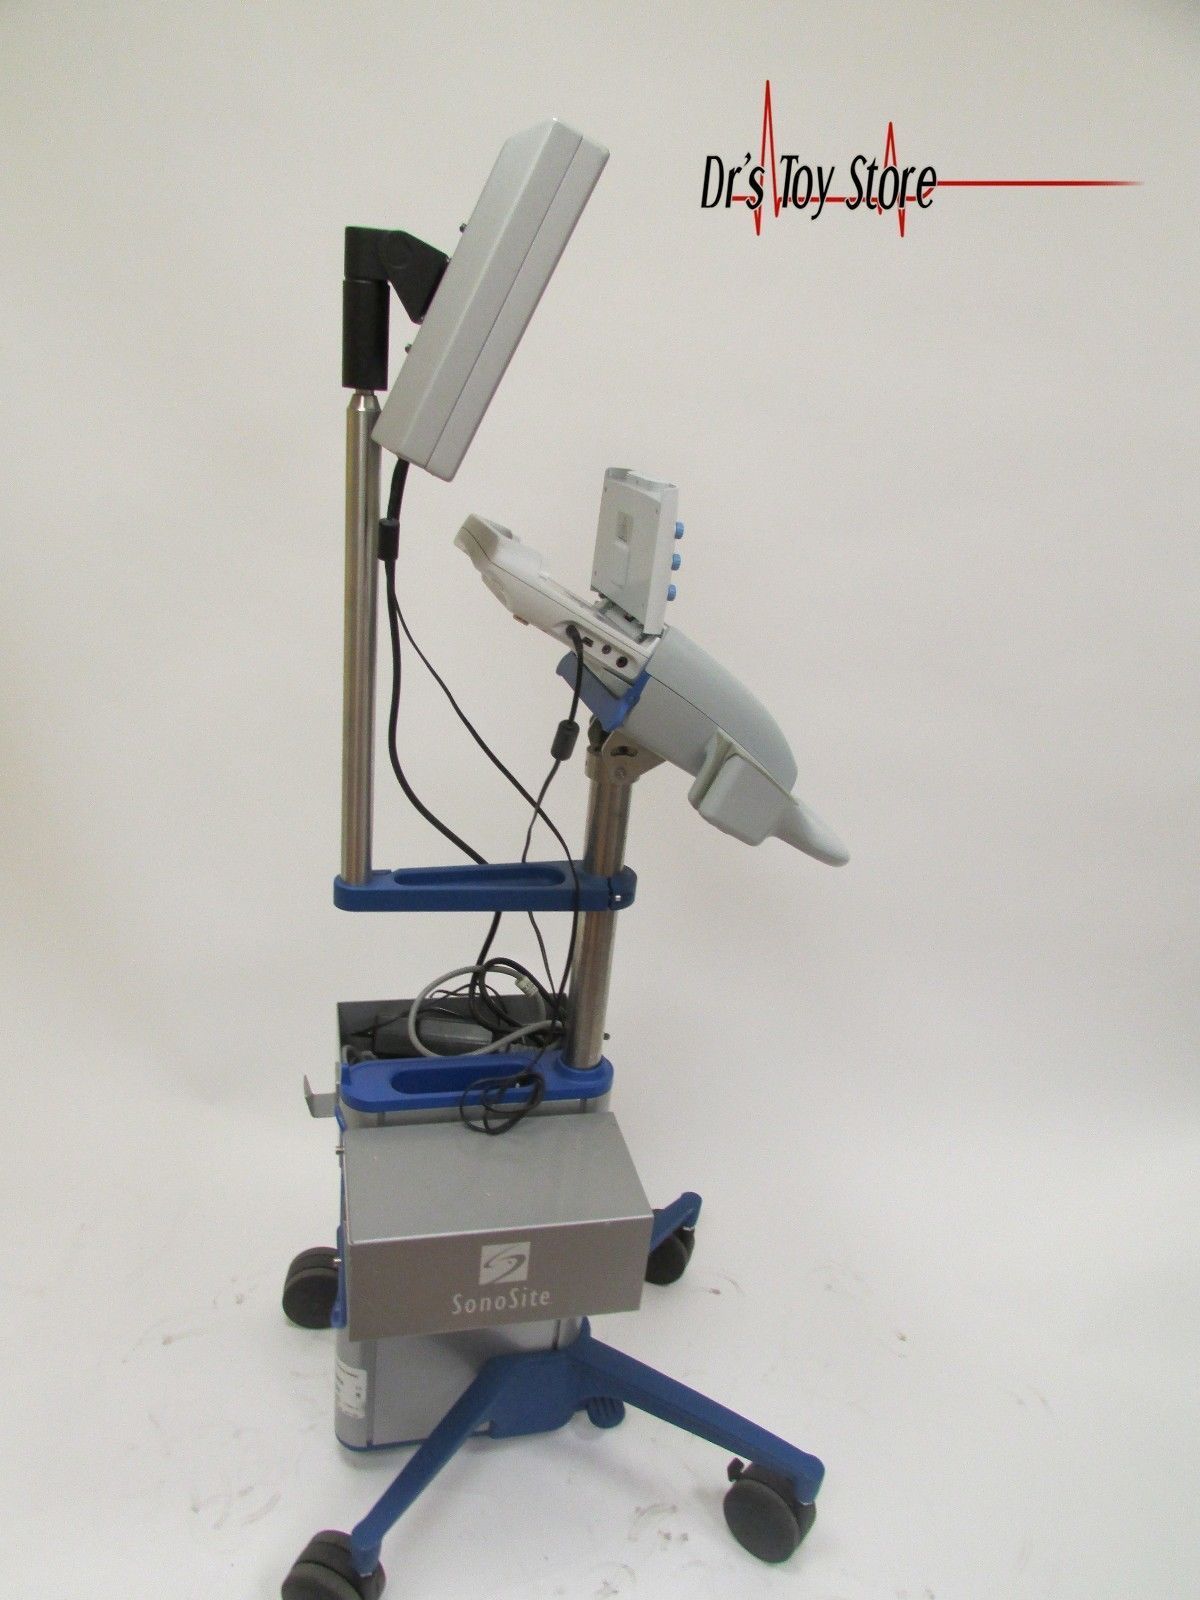 Sonosite180 Plus Ultrasound Machine DIAGNOSTIC ULTRASOUND MACHINES FOR SALE